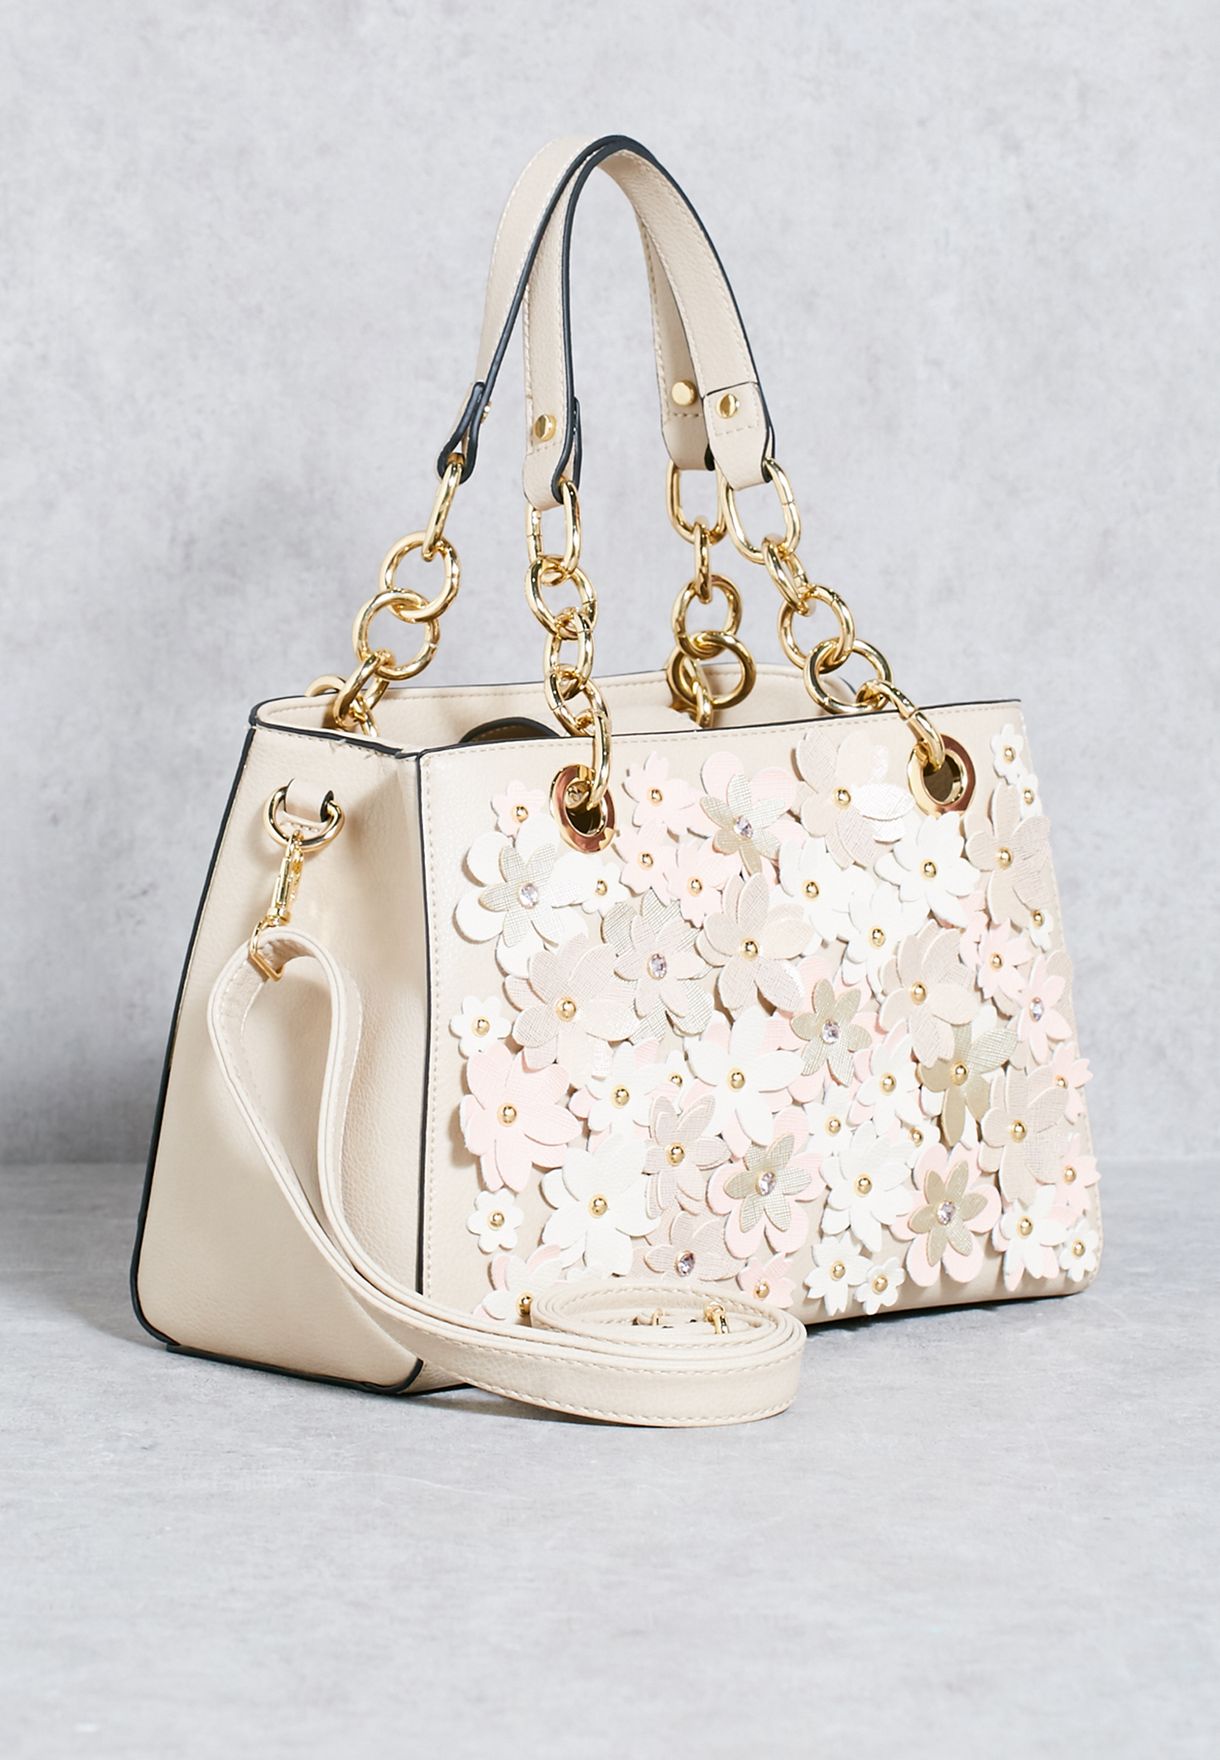 aldo flower purse